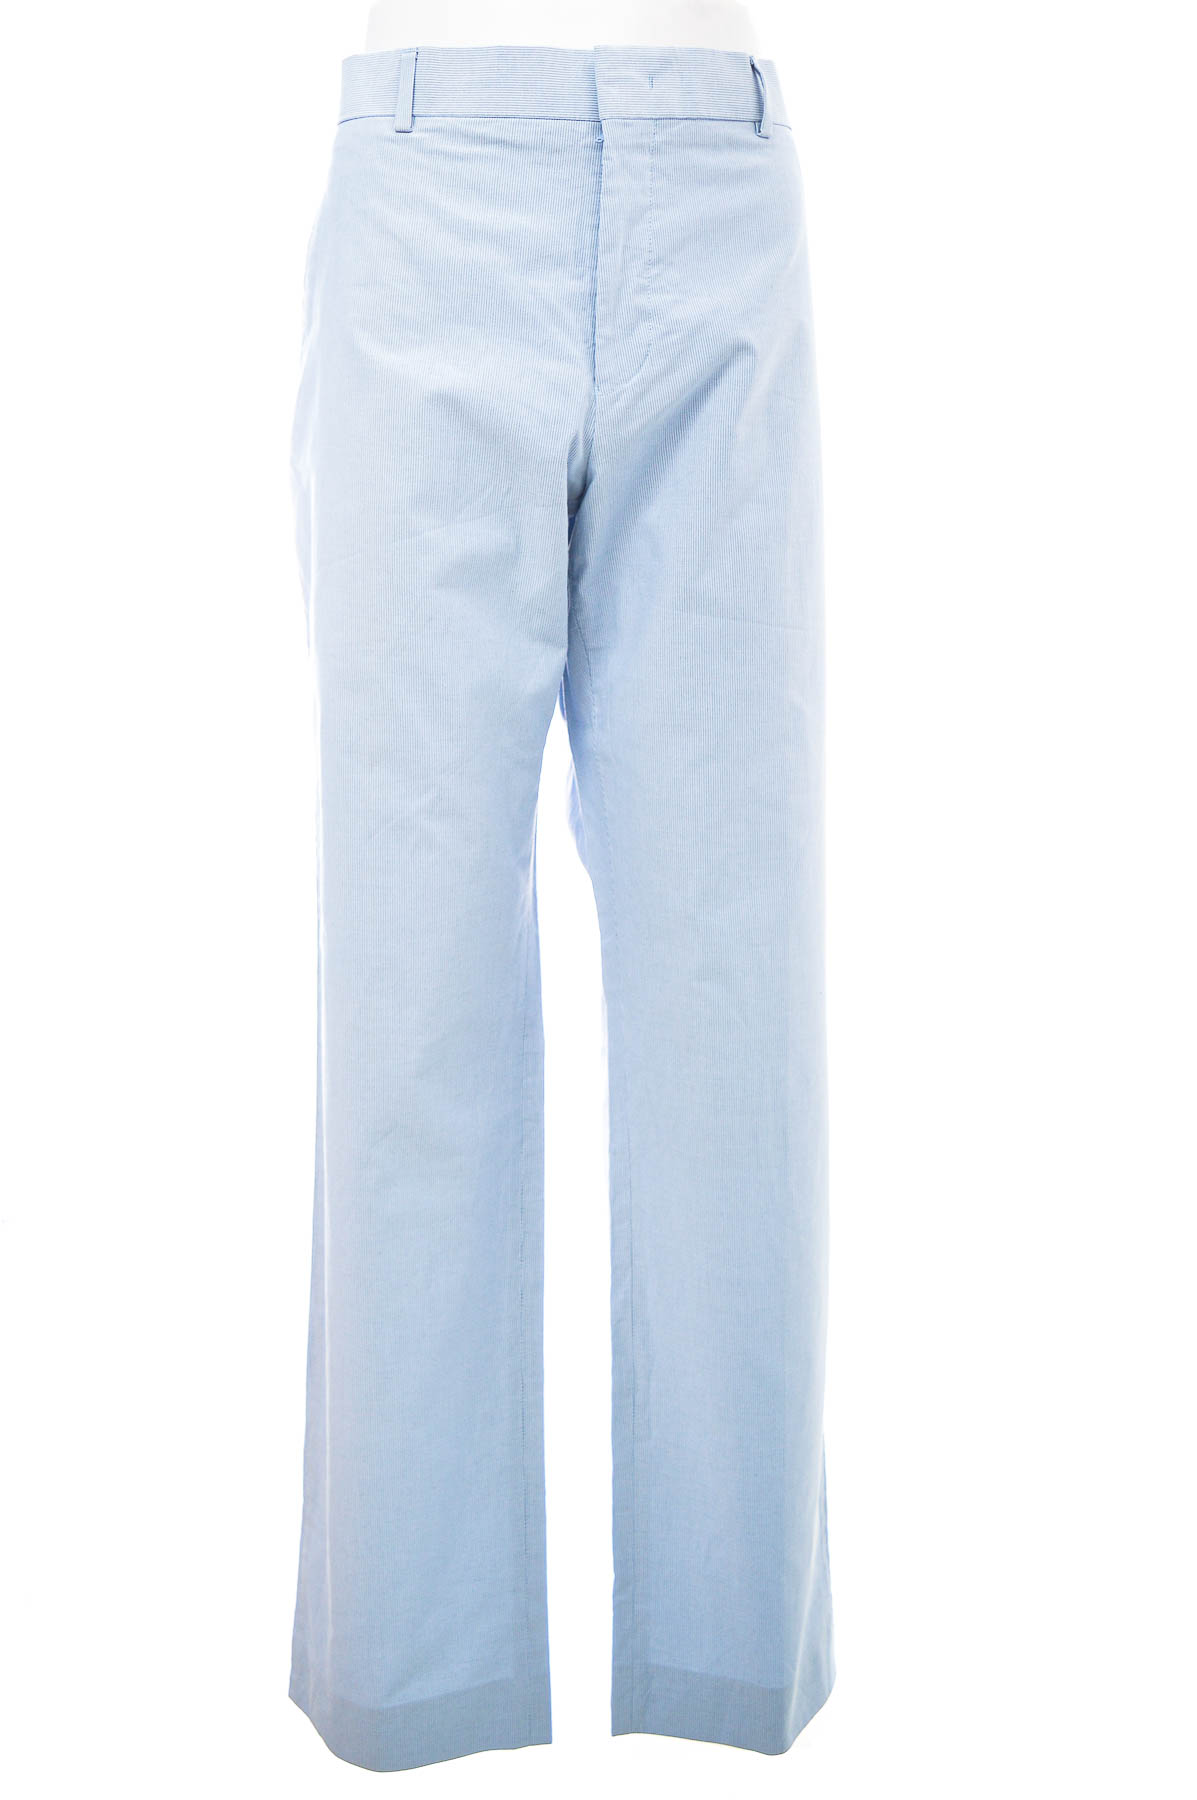 Men's trousers - SABA - 0